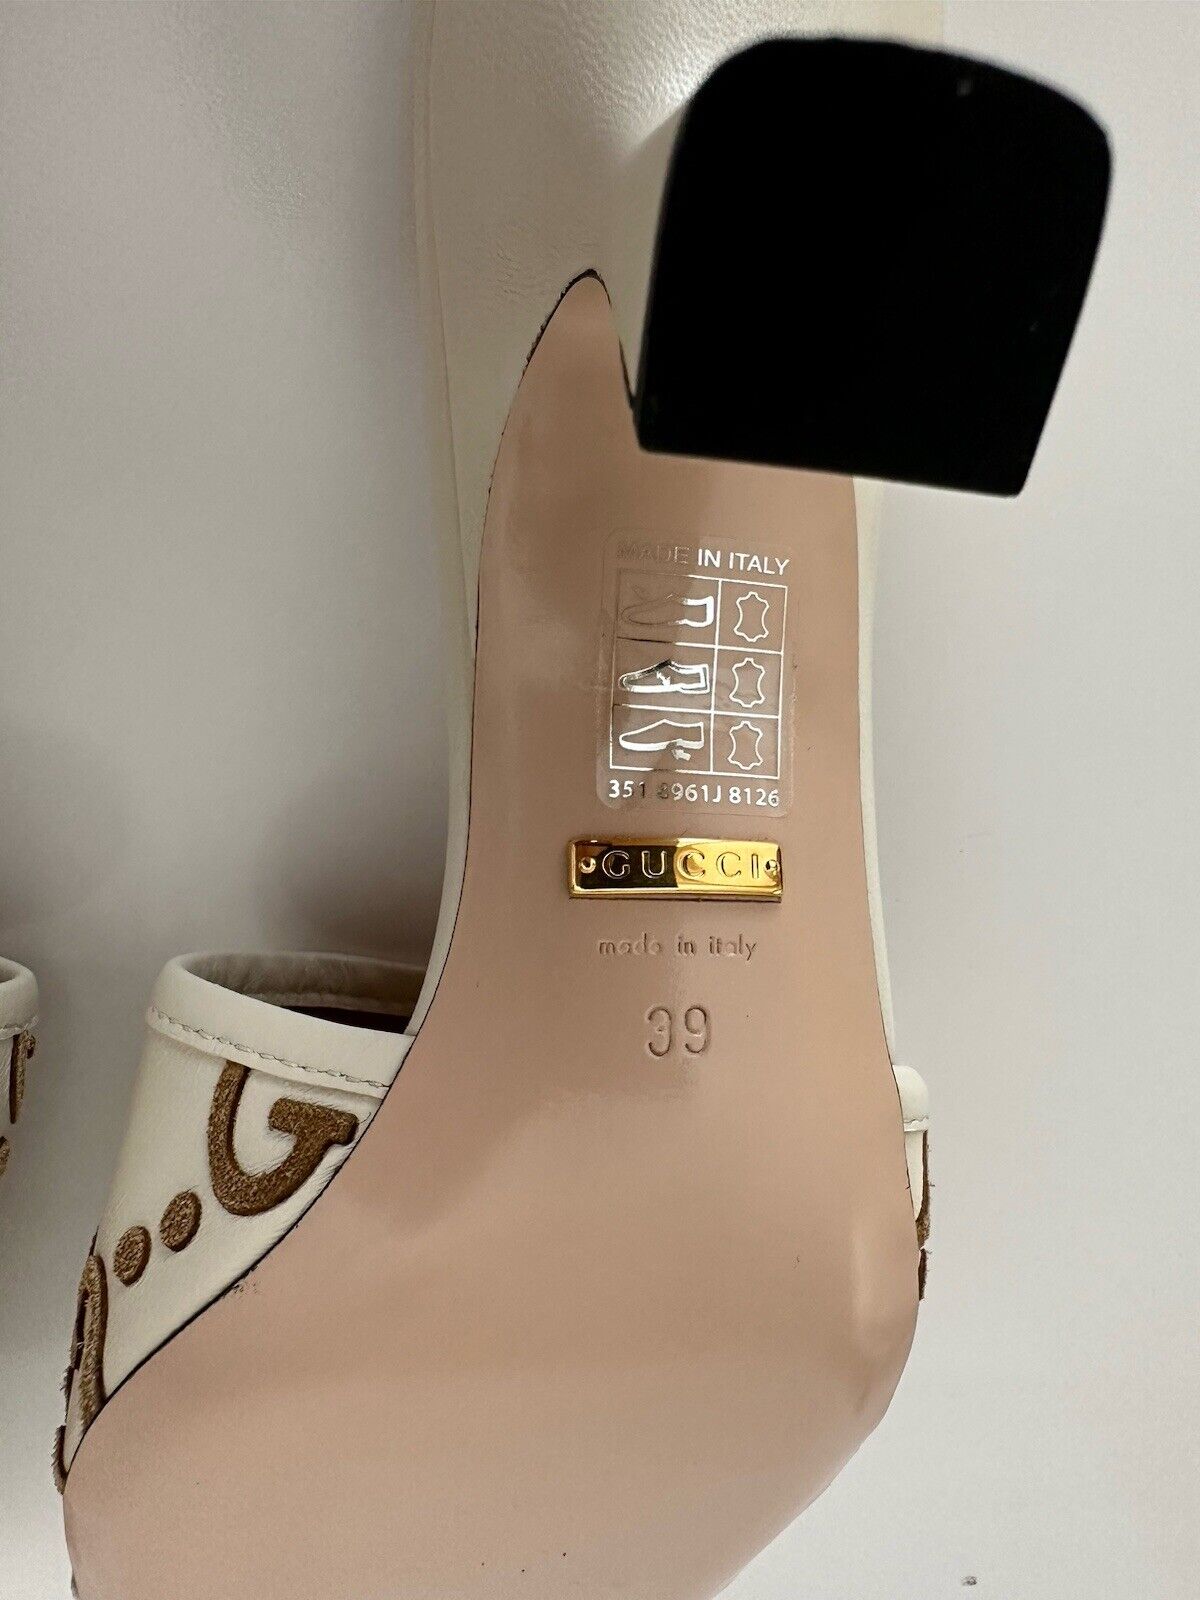 Gucci x Adidas Women's GG Leather Sandals Brown/White 9 US (39 Eu) 722445 IT NIB